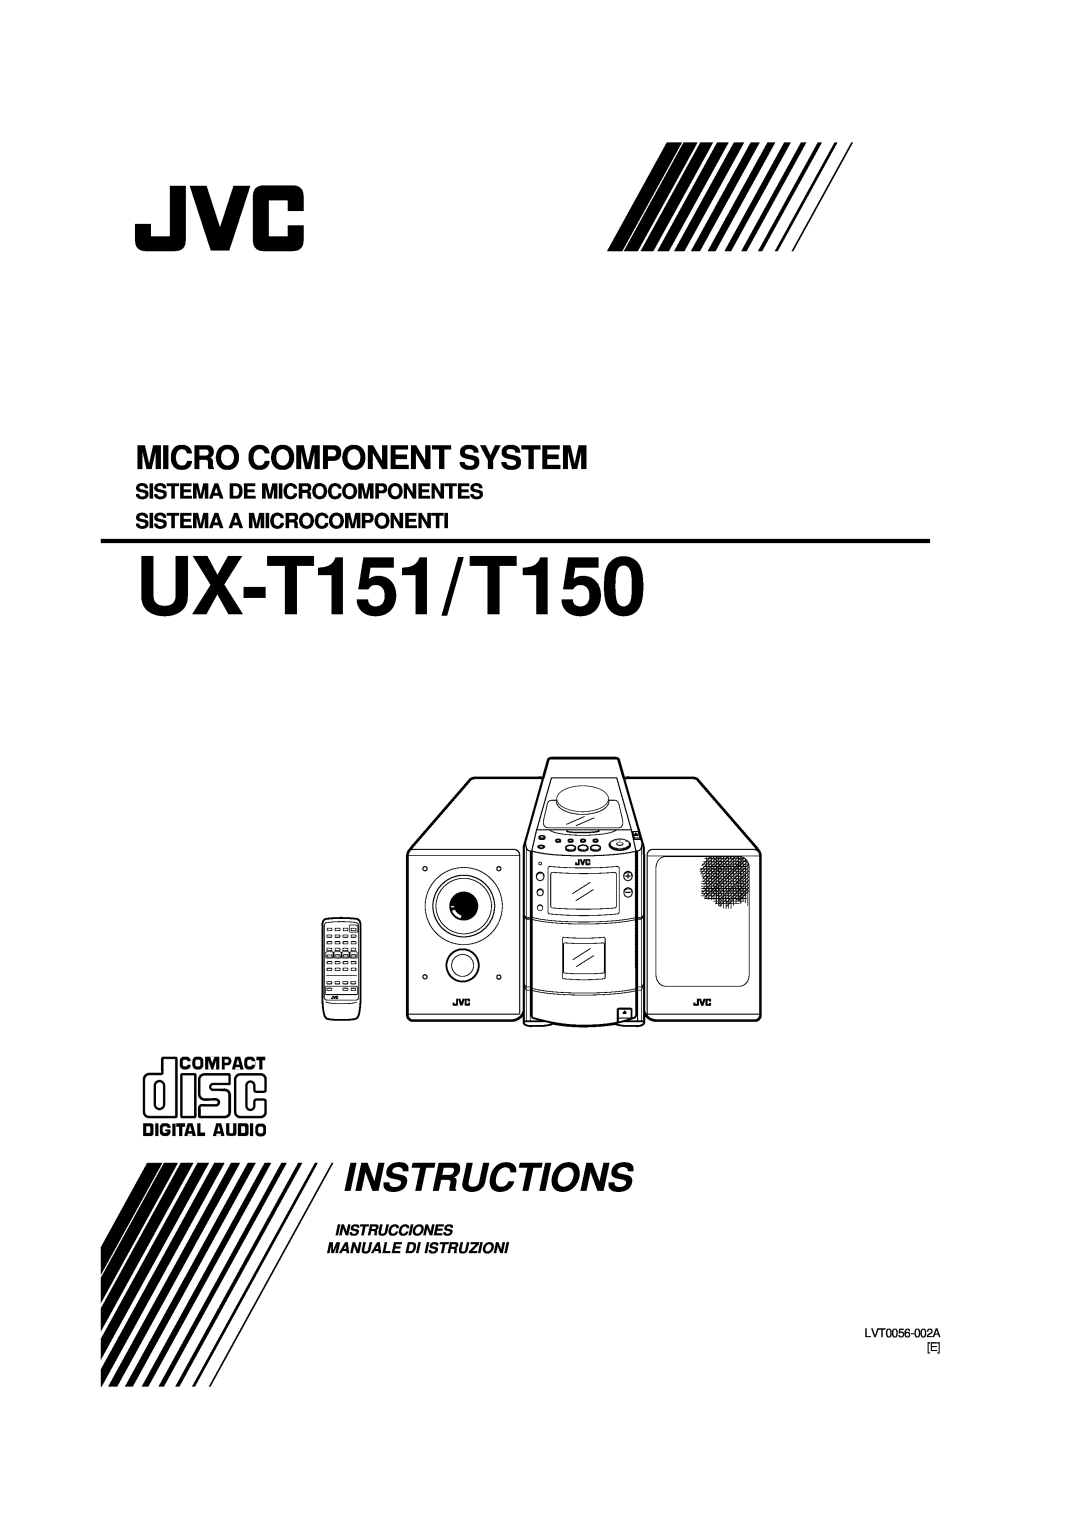 JVC UX-T150 manual Instrucciones Manuale Di Istruzioni, UX-T151/T150, Instructions, Micro Component System 